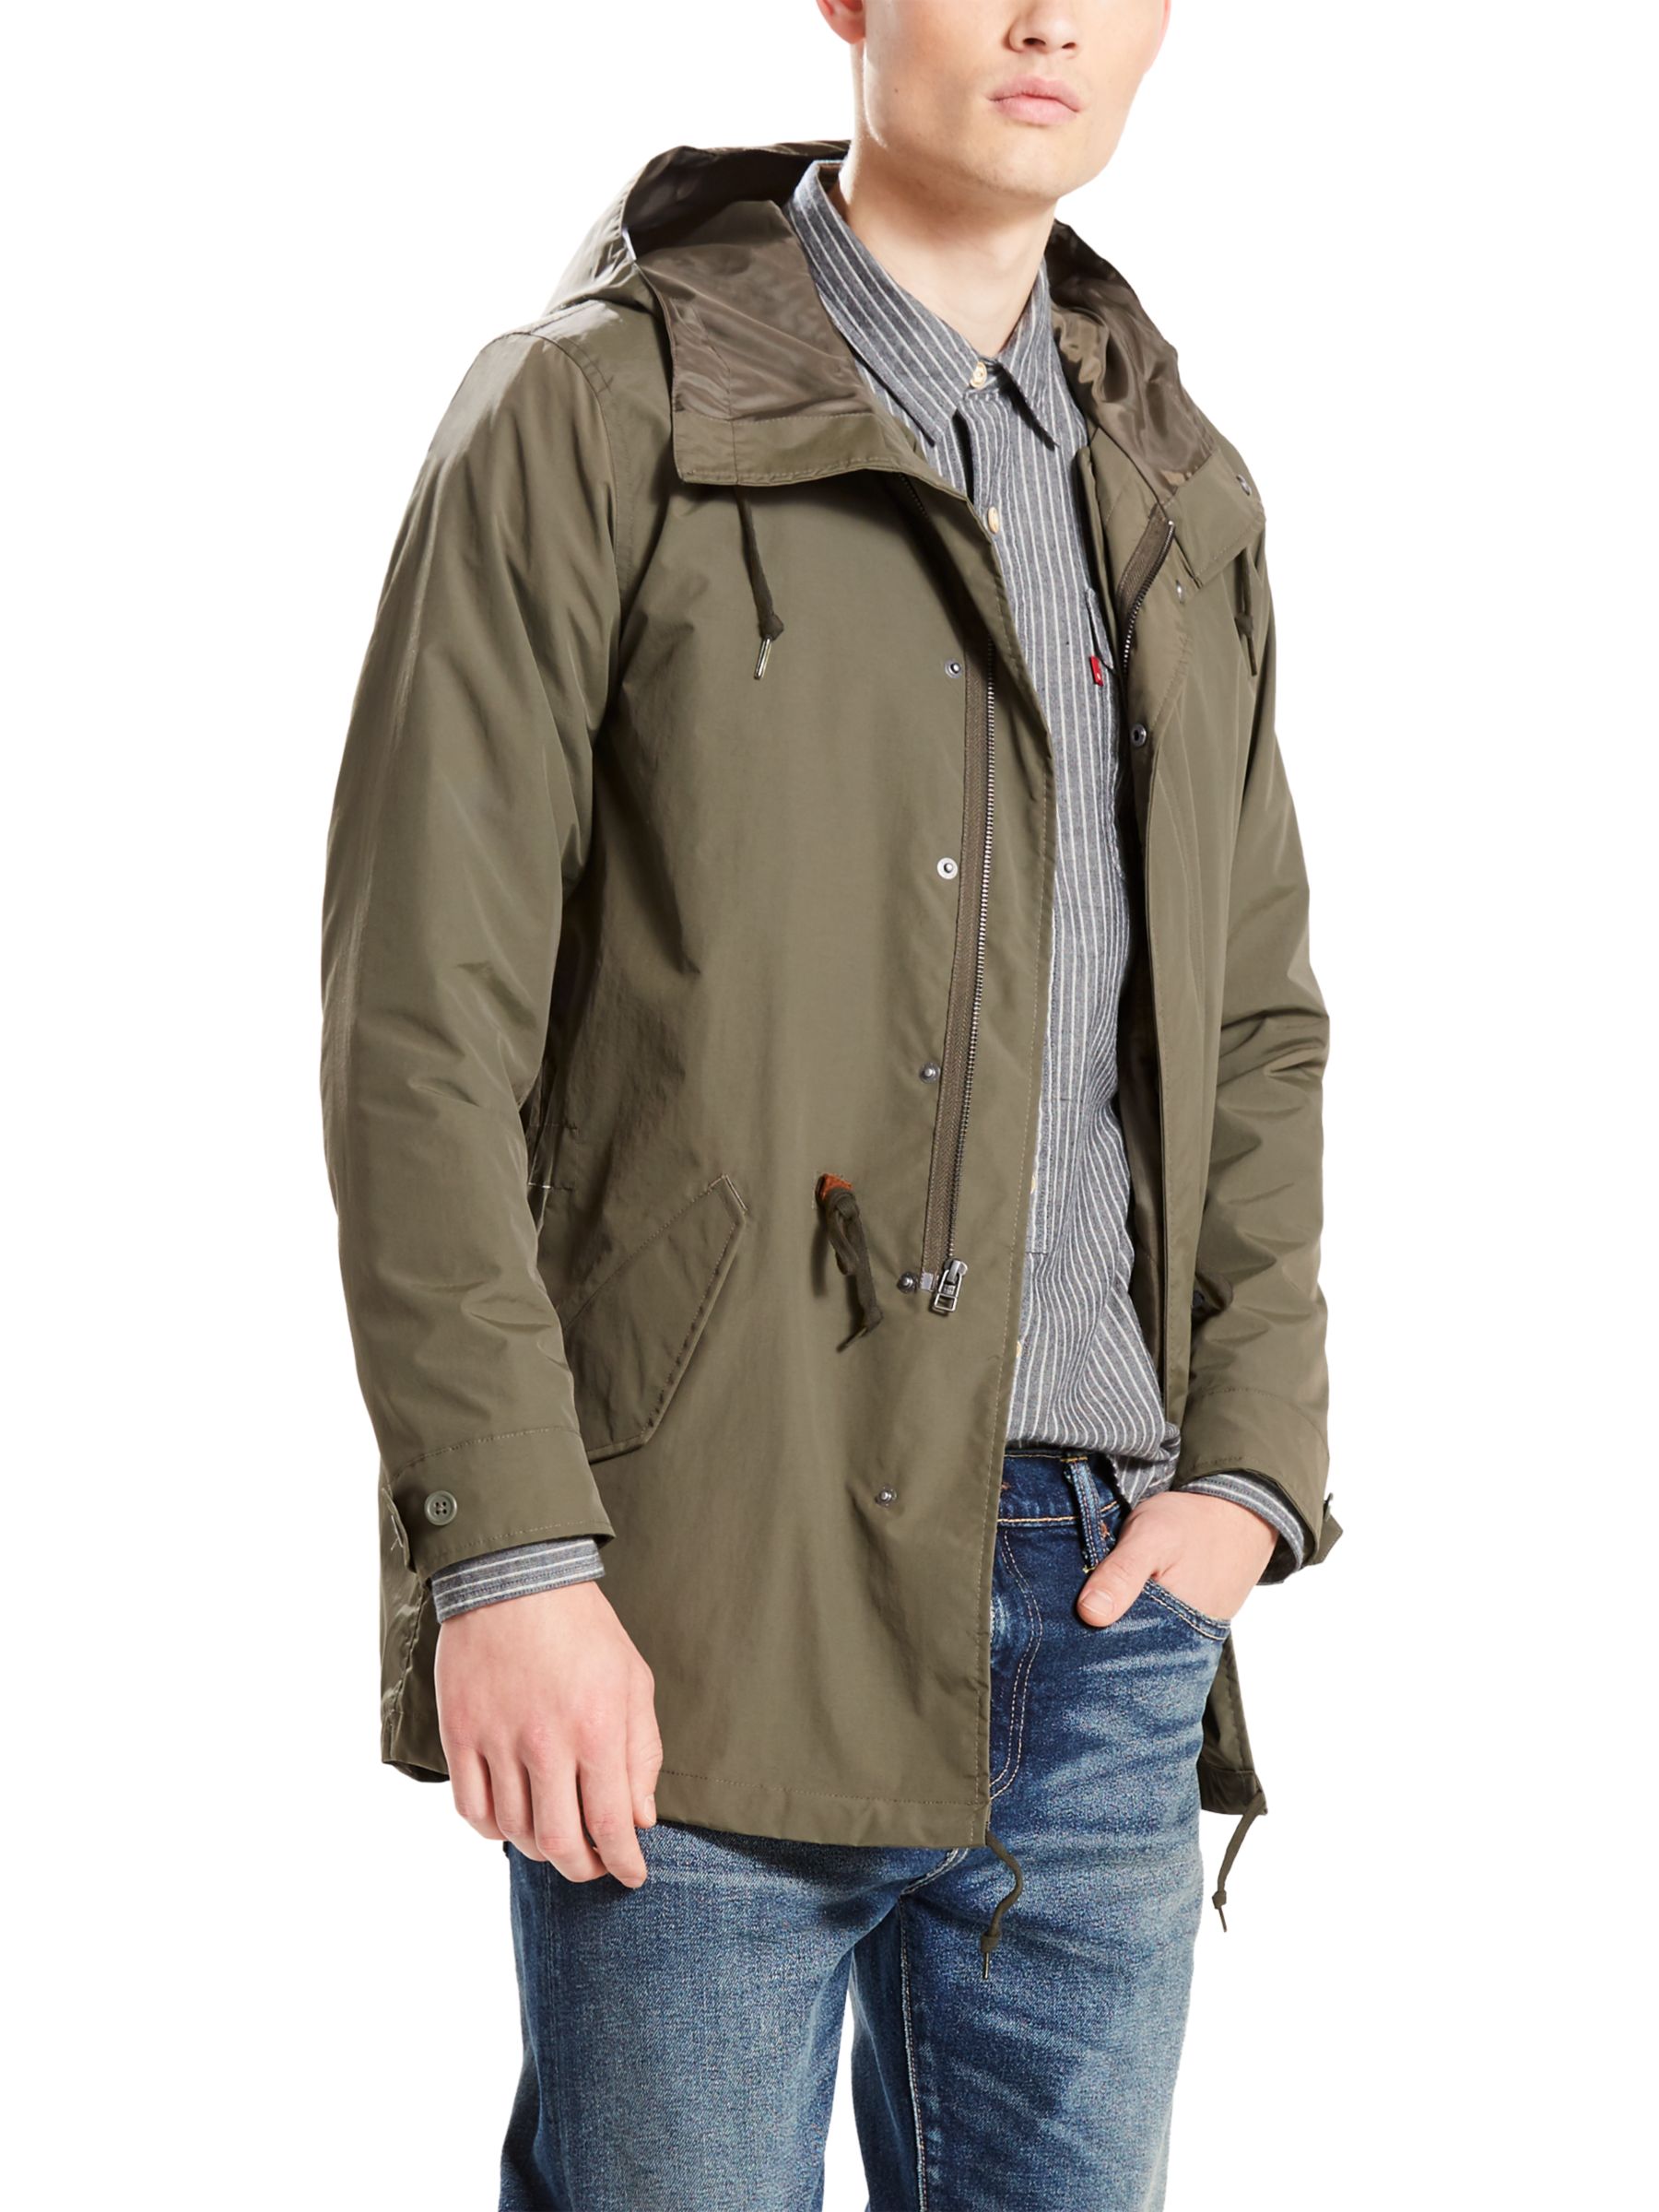 levis lined fishtail parka jacket